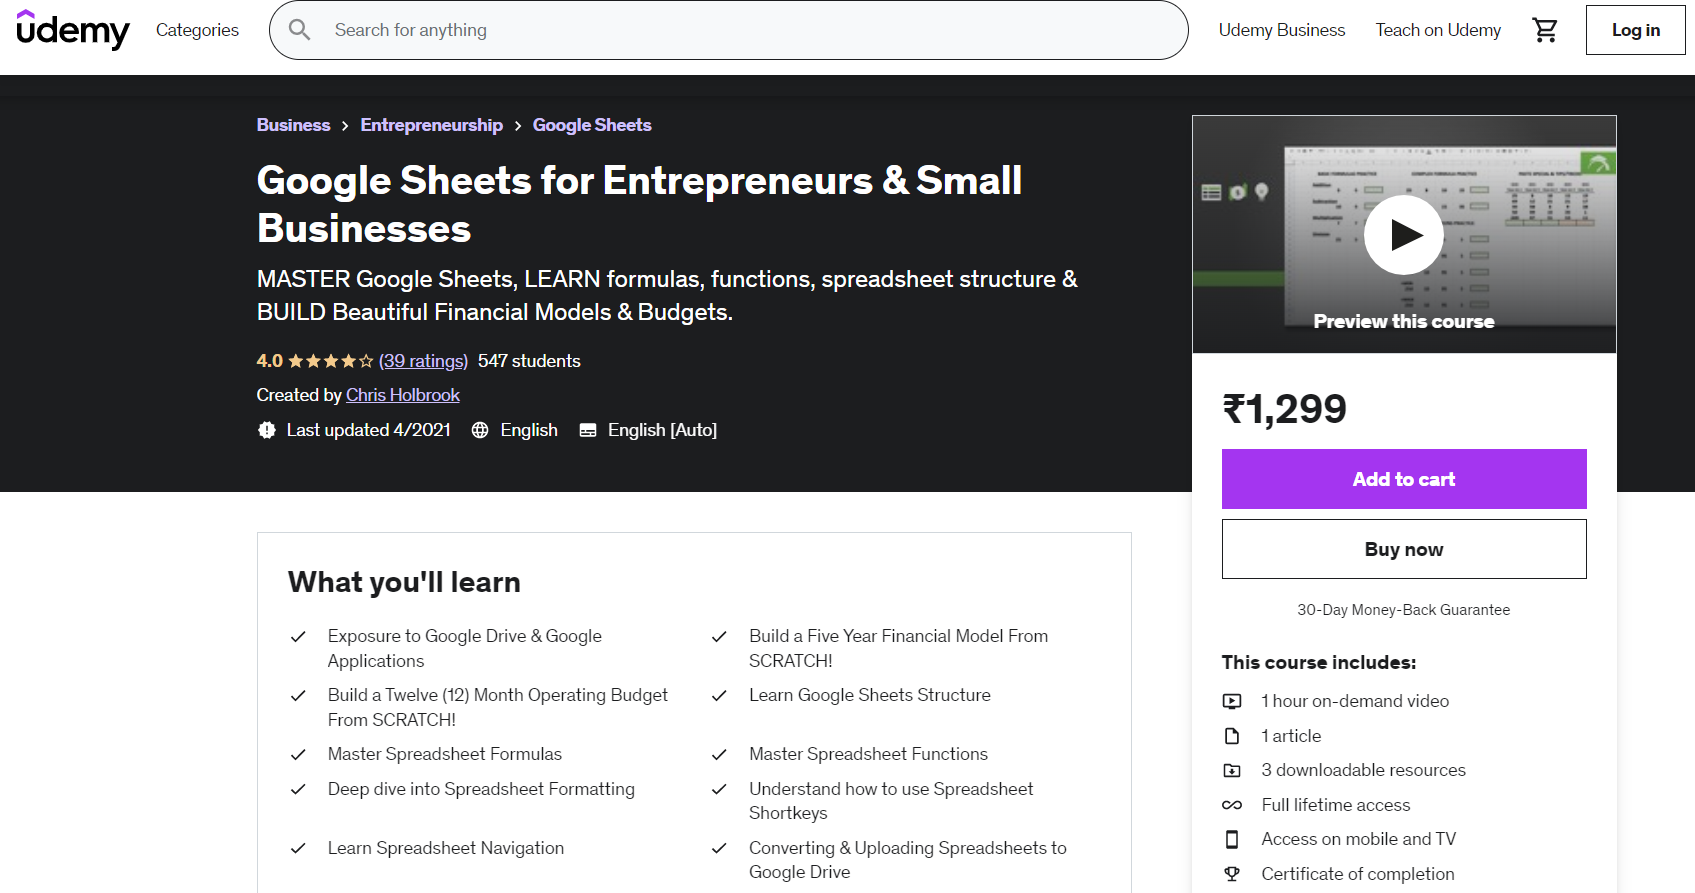 Google Sheets for Entrepreneurs & Small Businesses